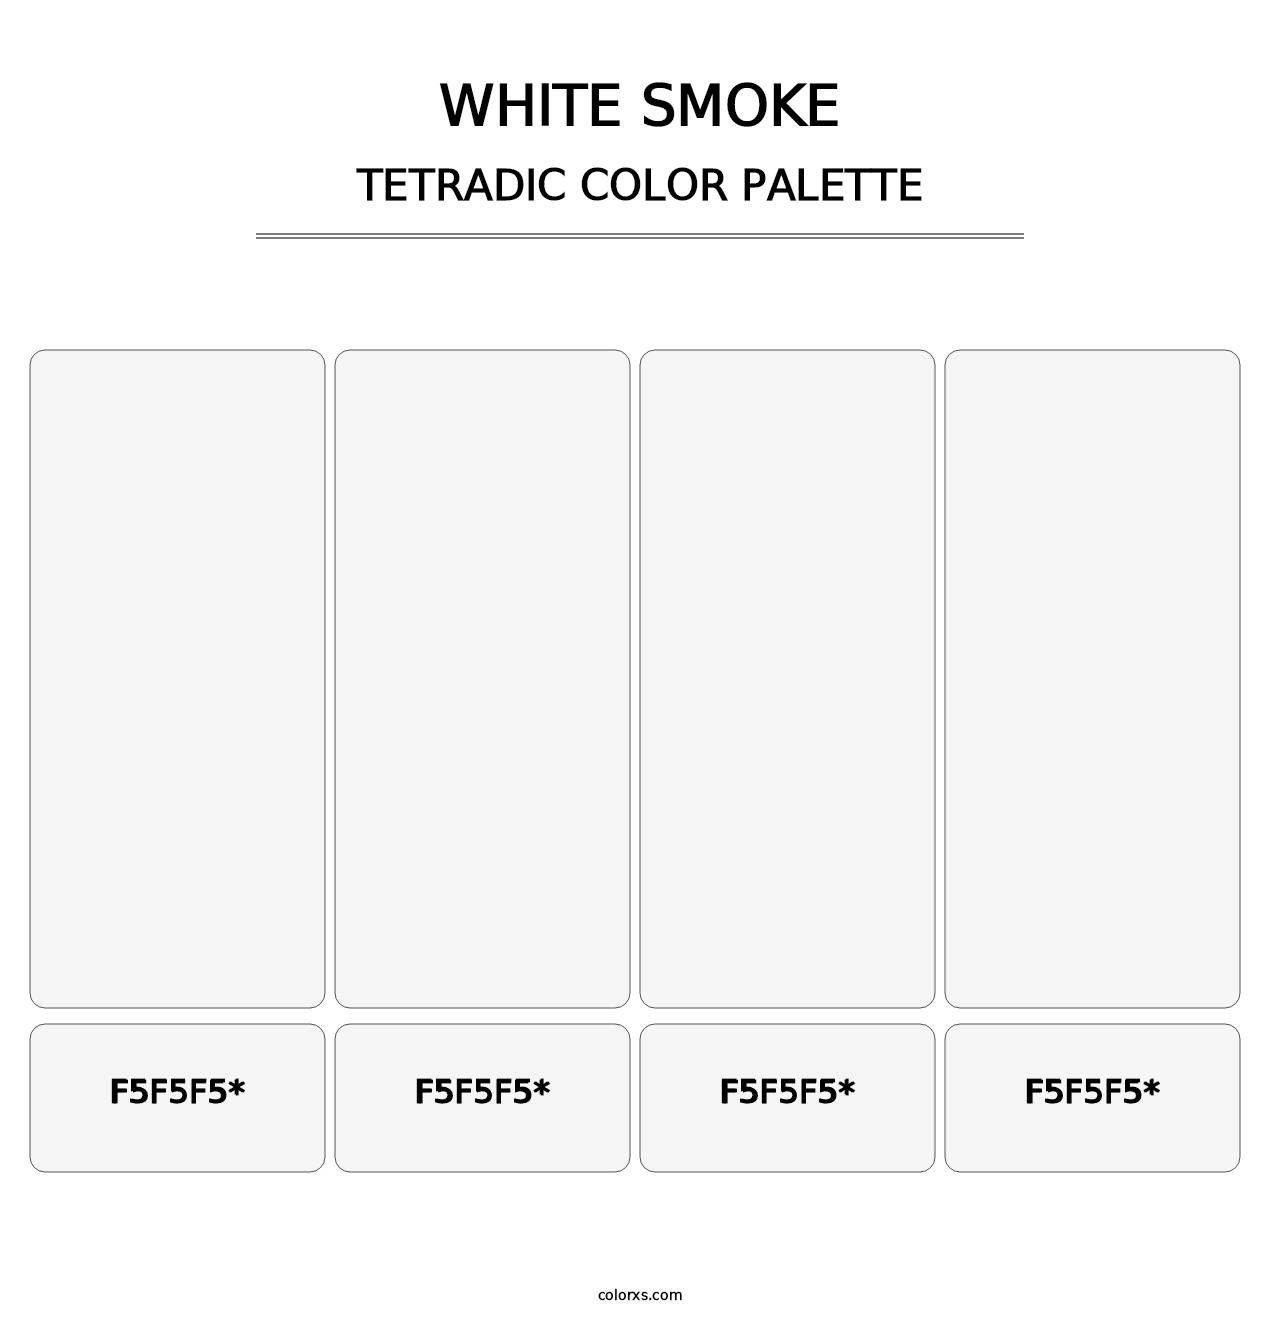 White Smoke - Tetradic Color Palette